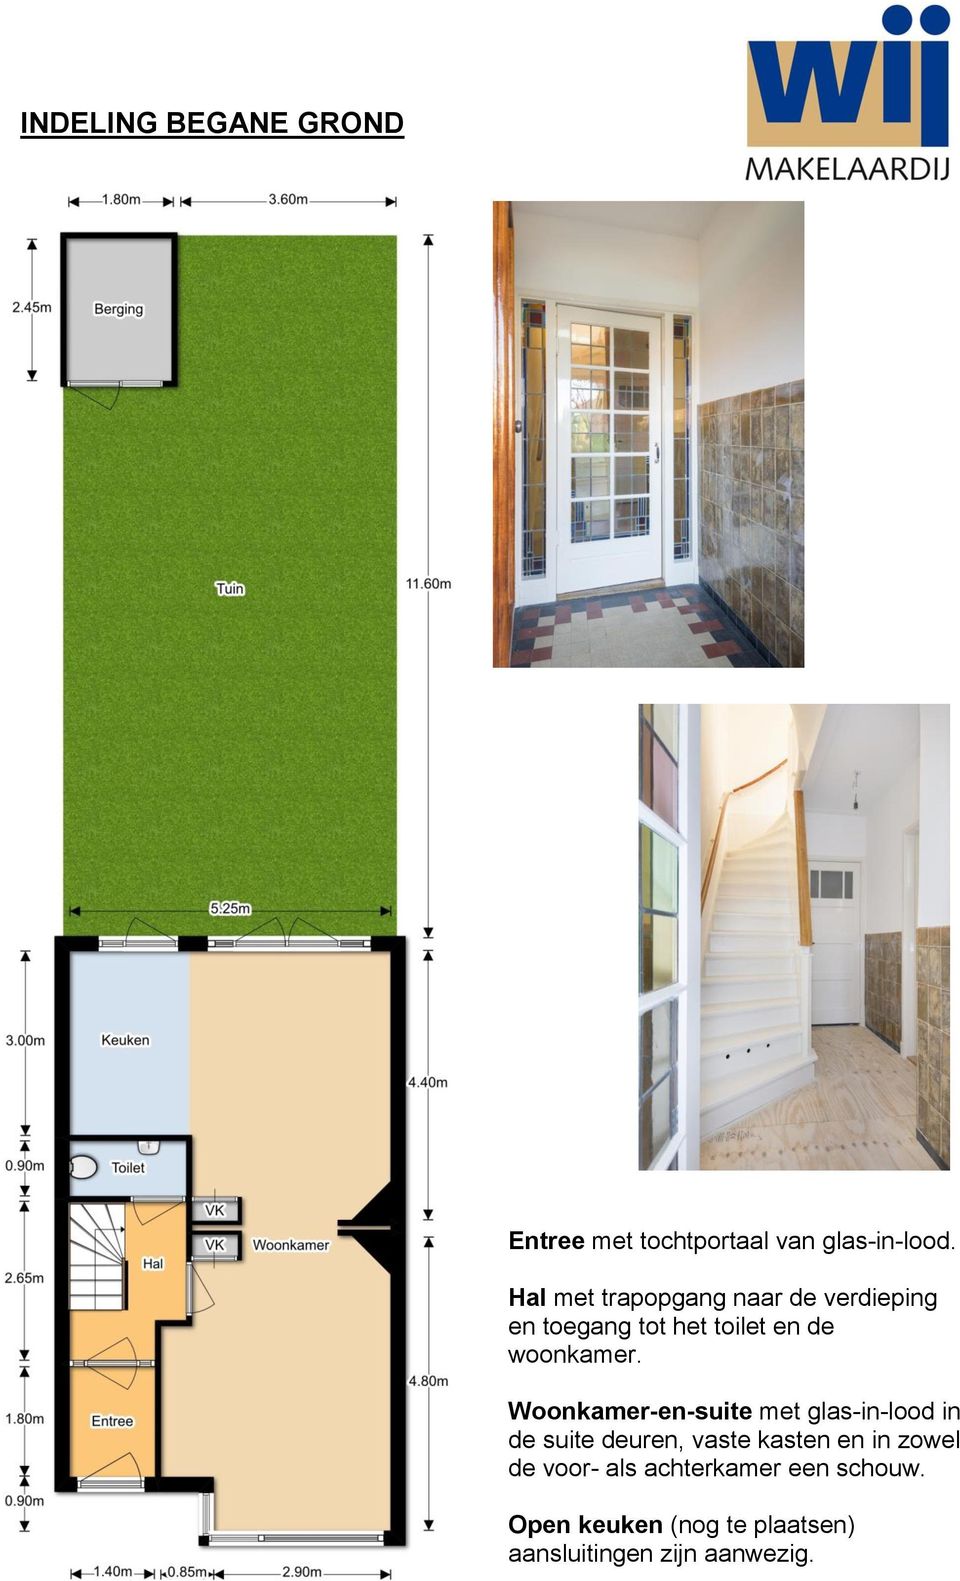 Woonkamer-en-suite met glas-in-lood in de suite deuren, vaste kasten en in zowel